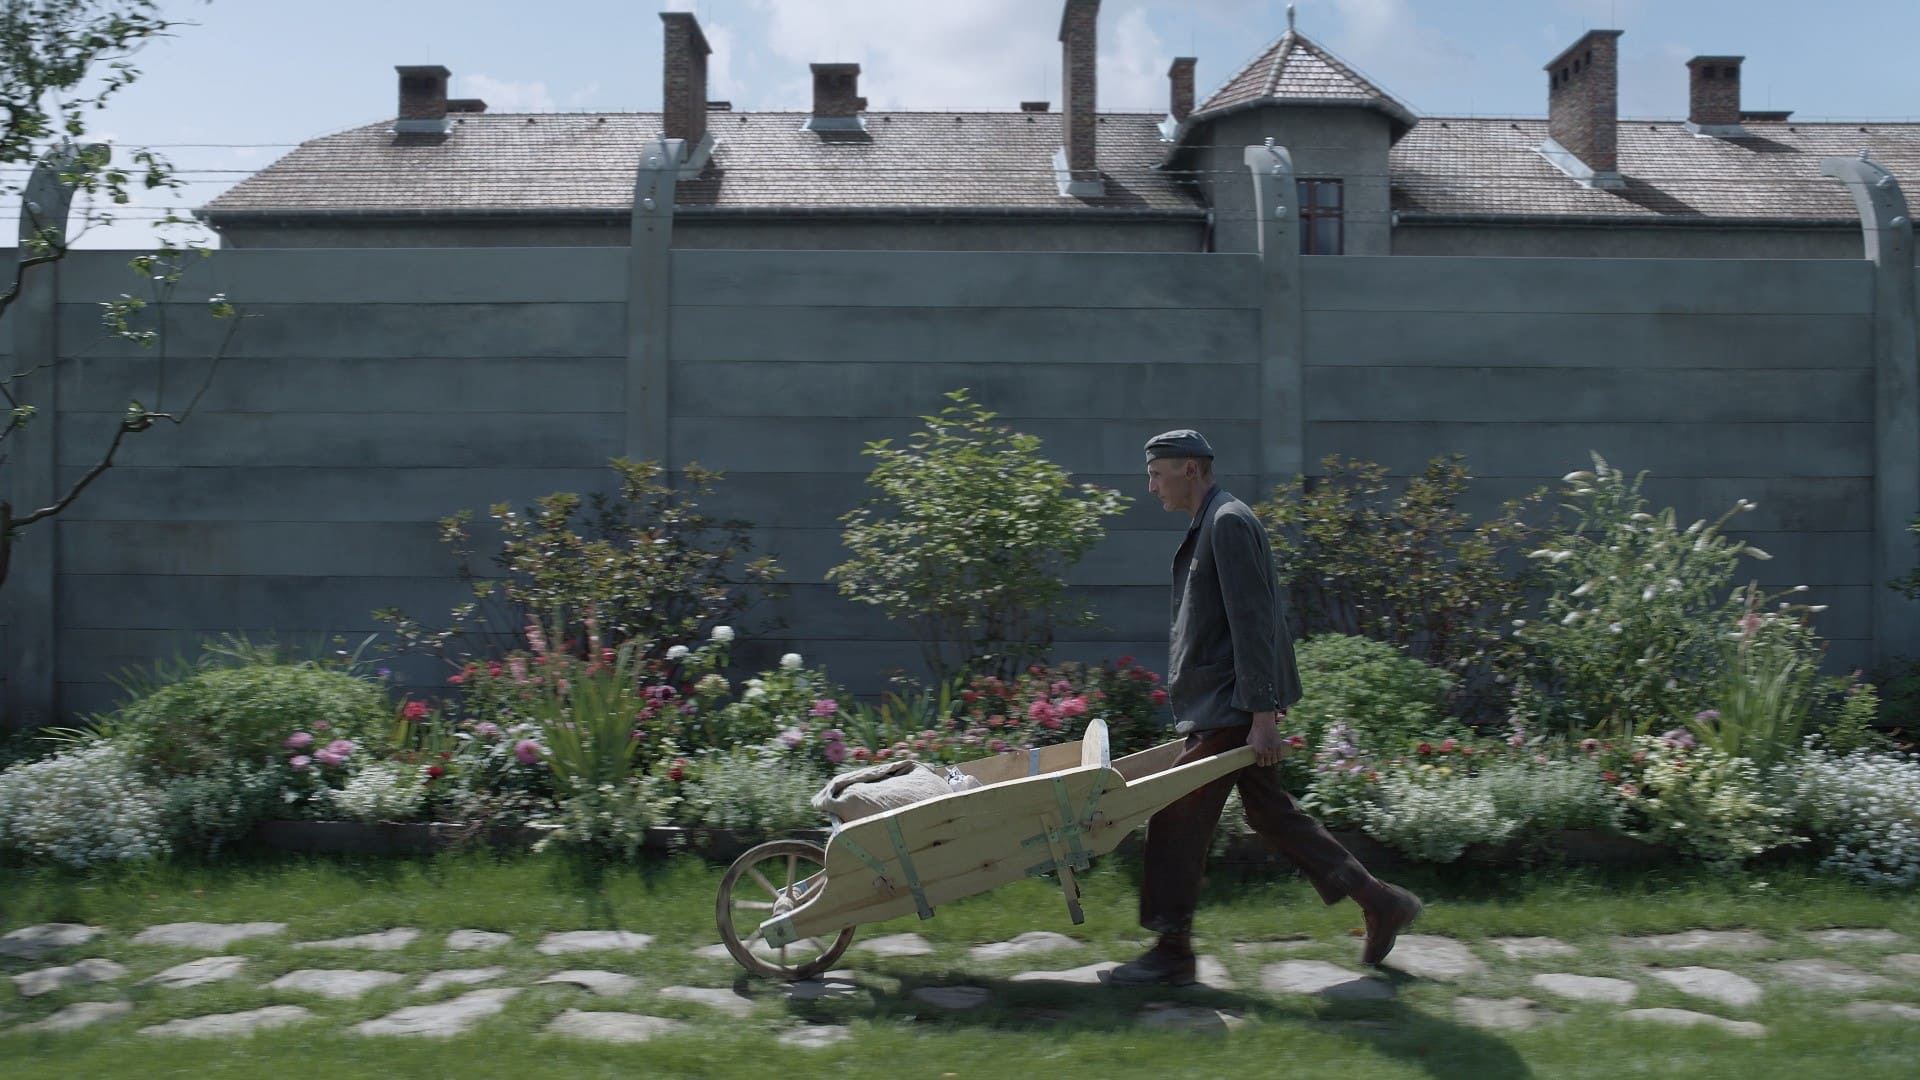 Still from The Zone of Interest: a man pushes a wheelbarrow through a garden